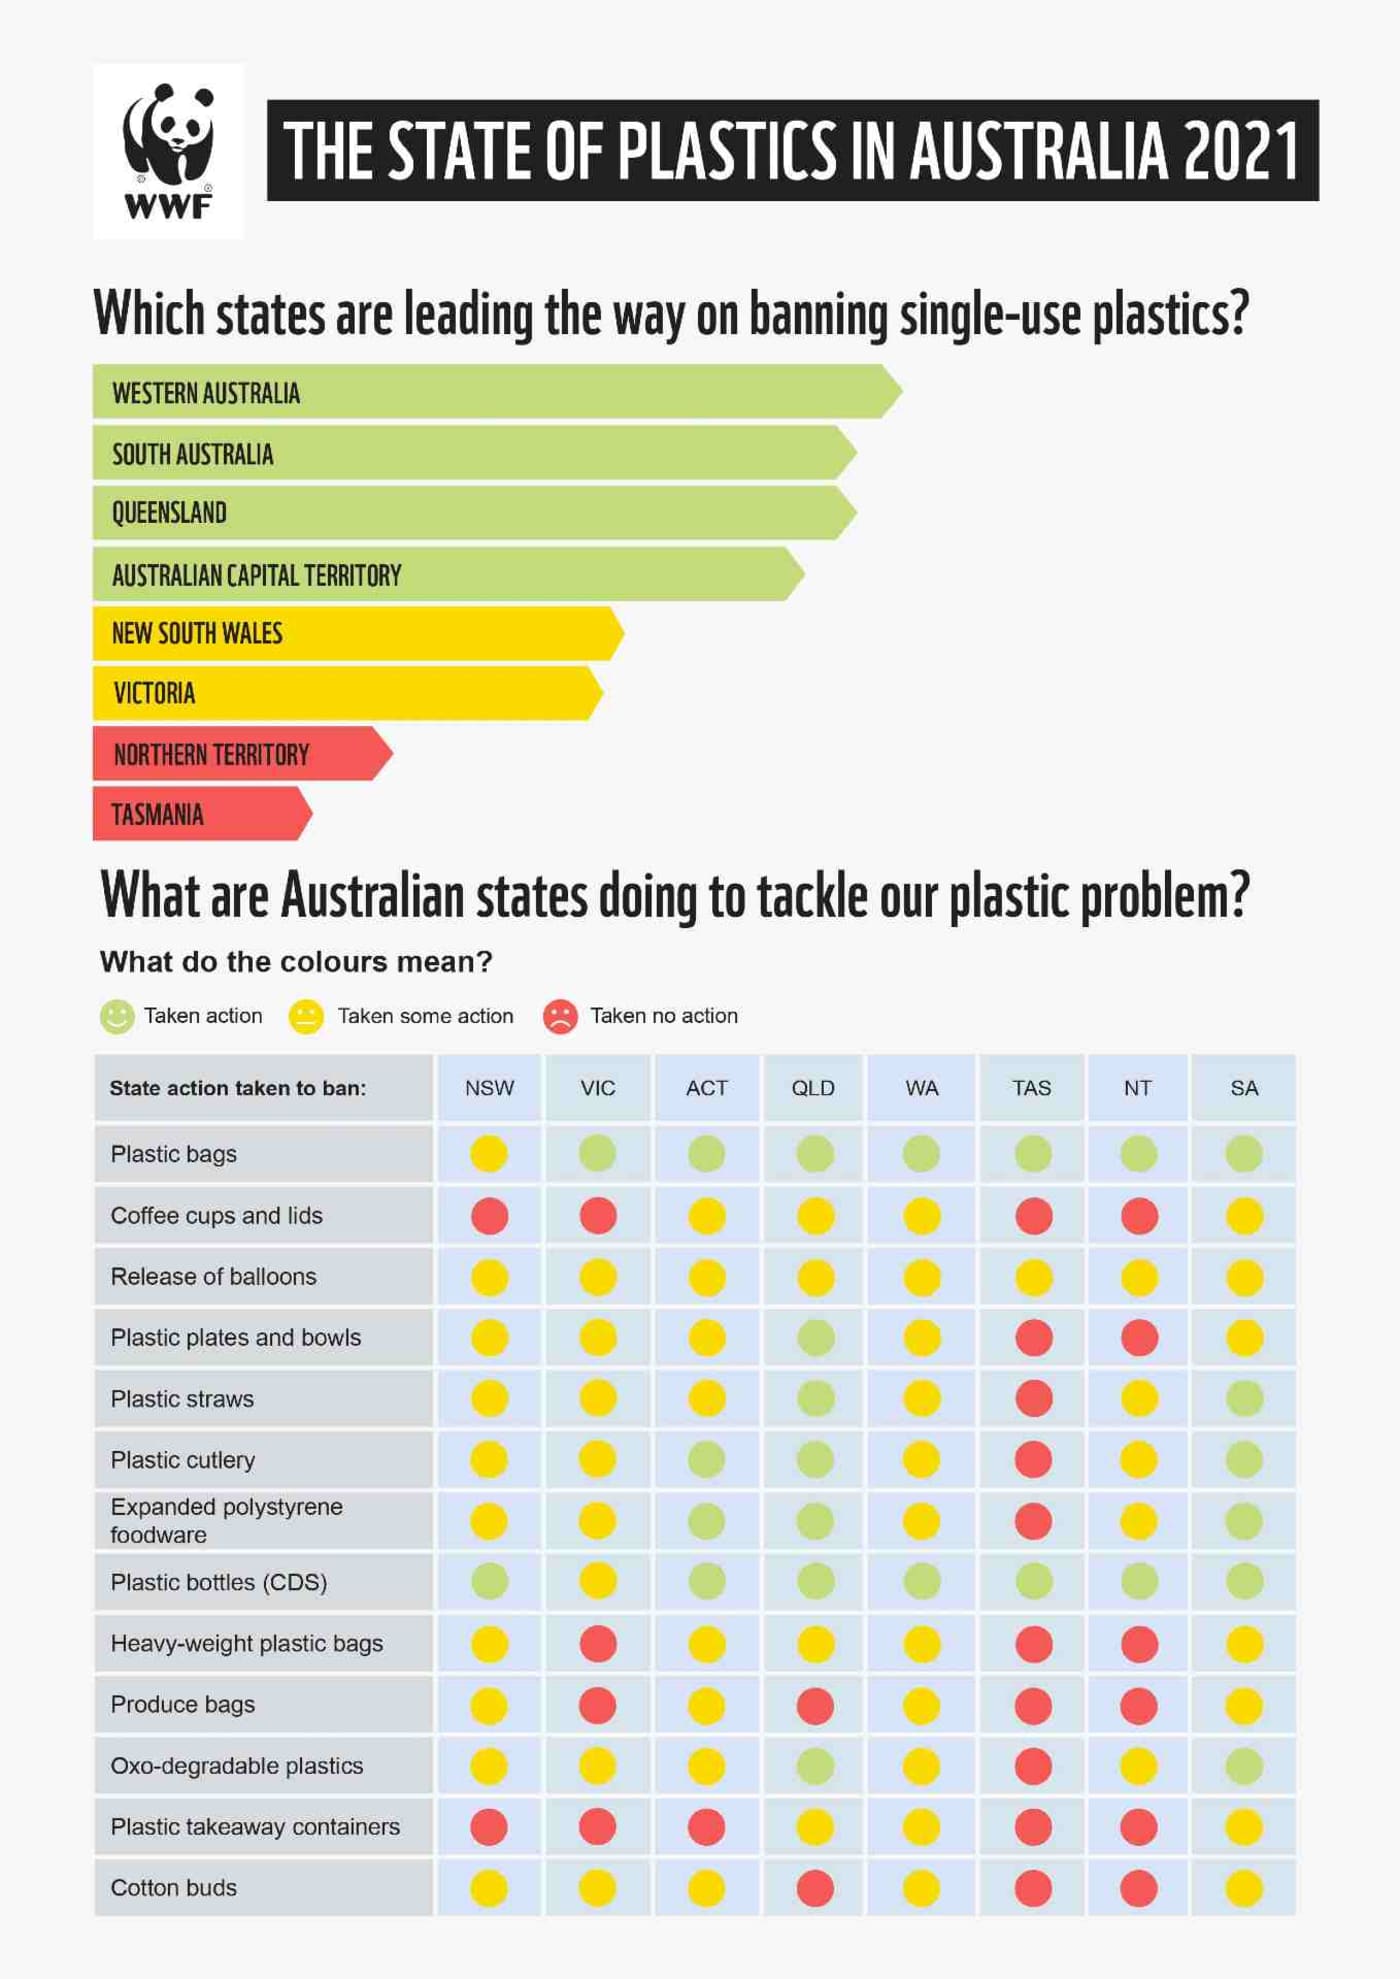 The state of plastics in Australia - 2021 scorecard